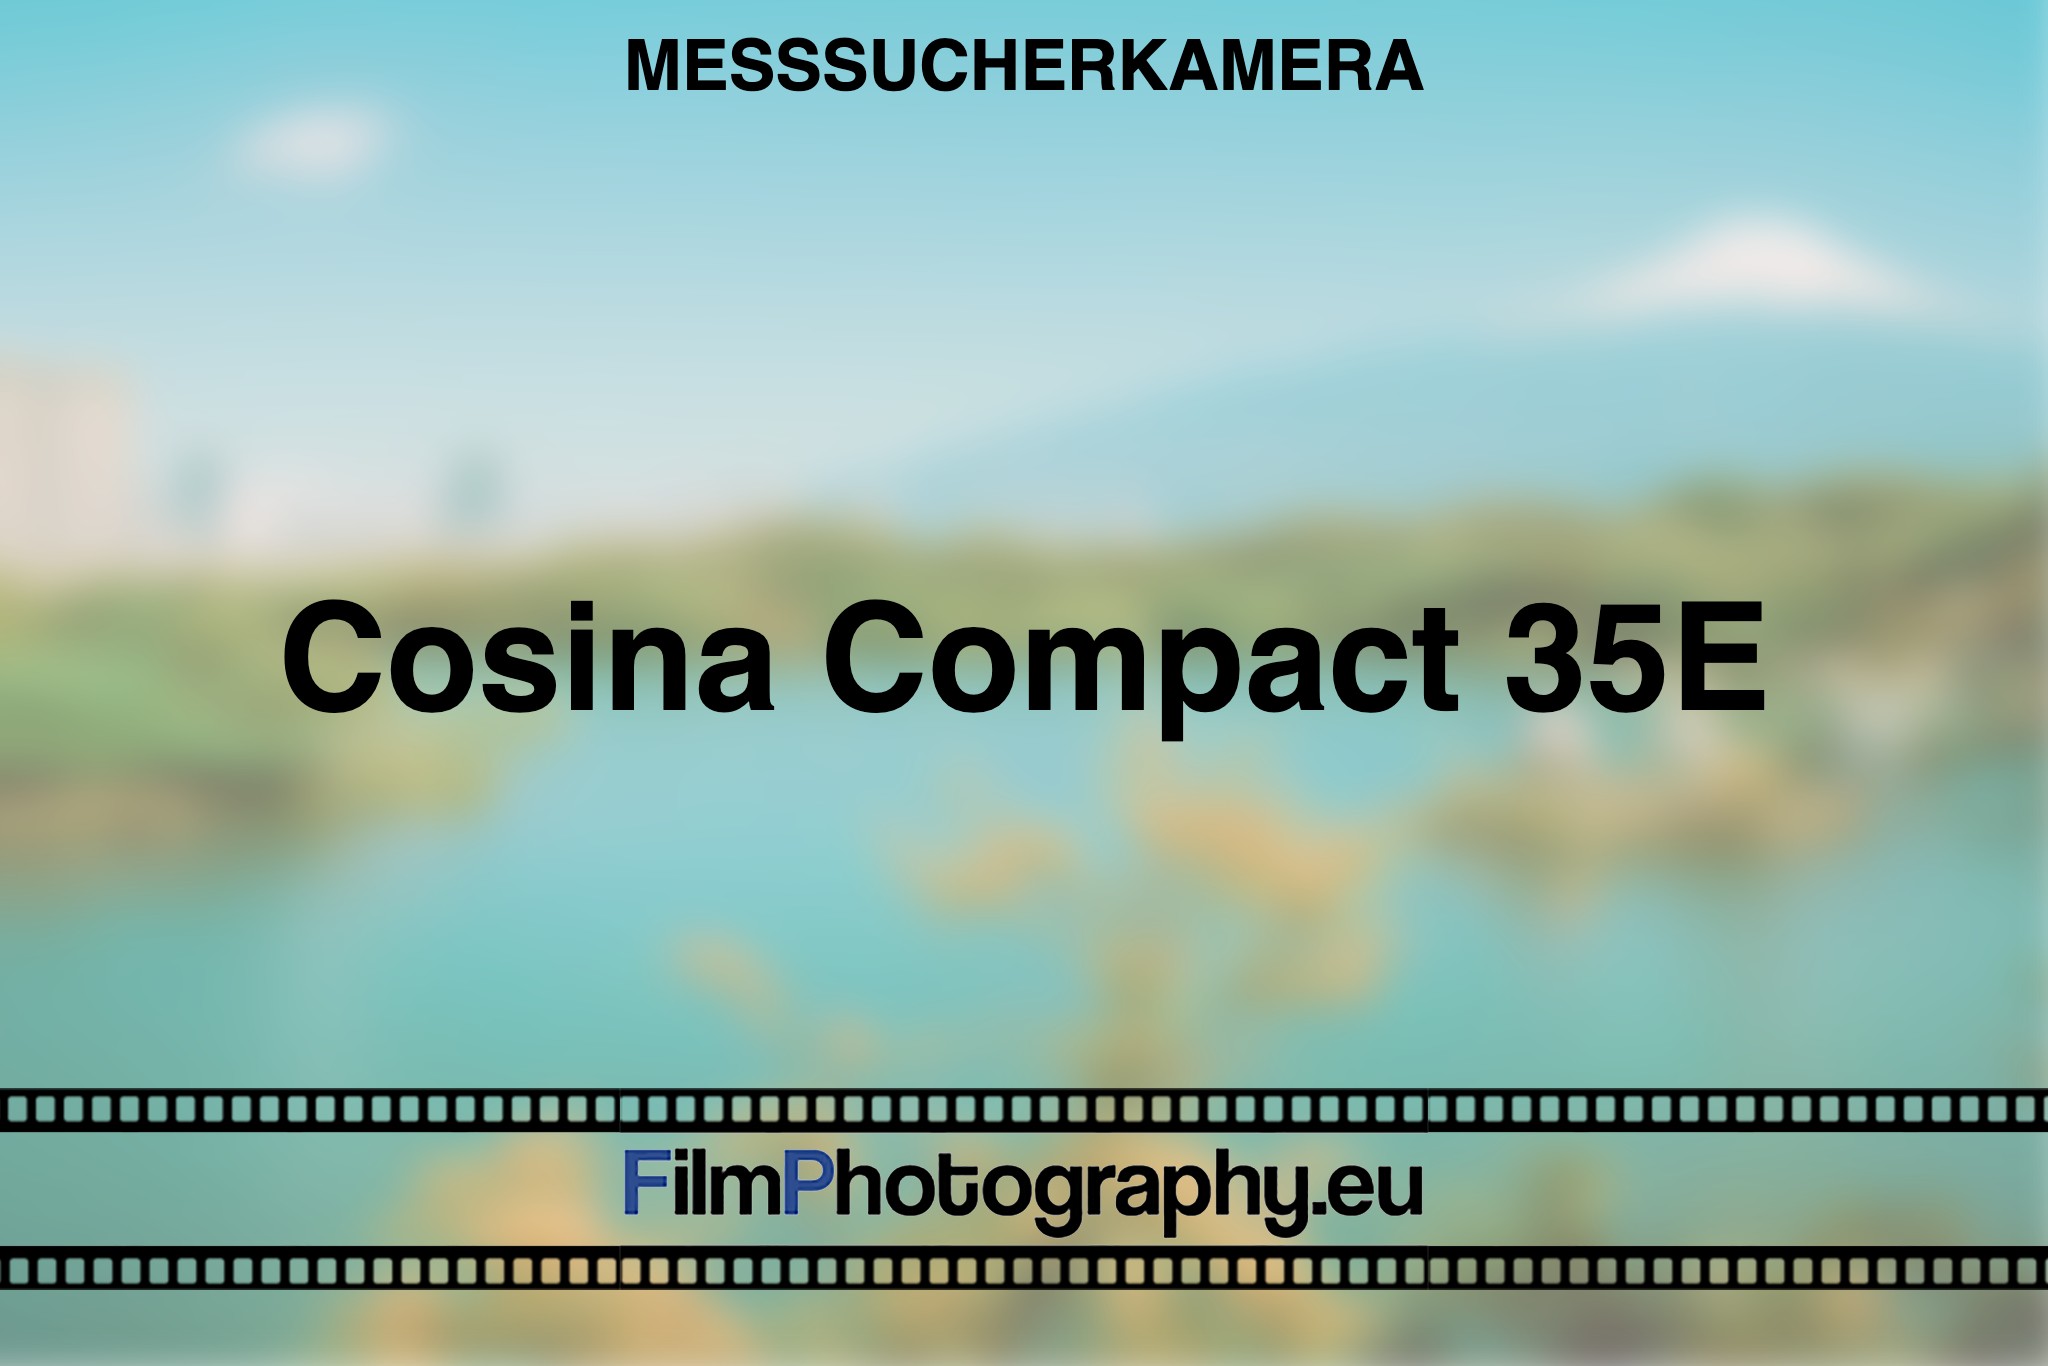 cosina-compact-35e-messsucherkamera-bnv